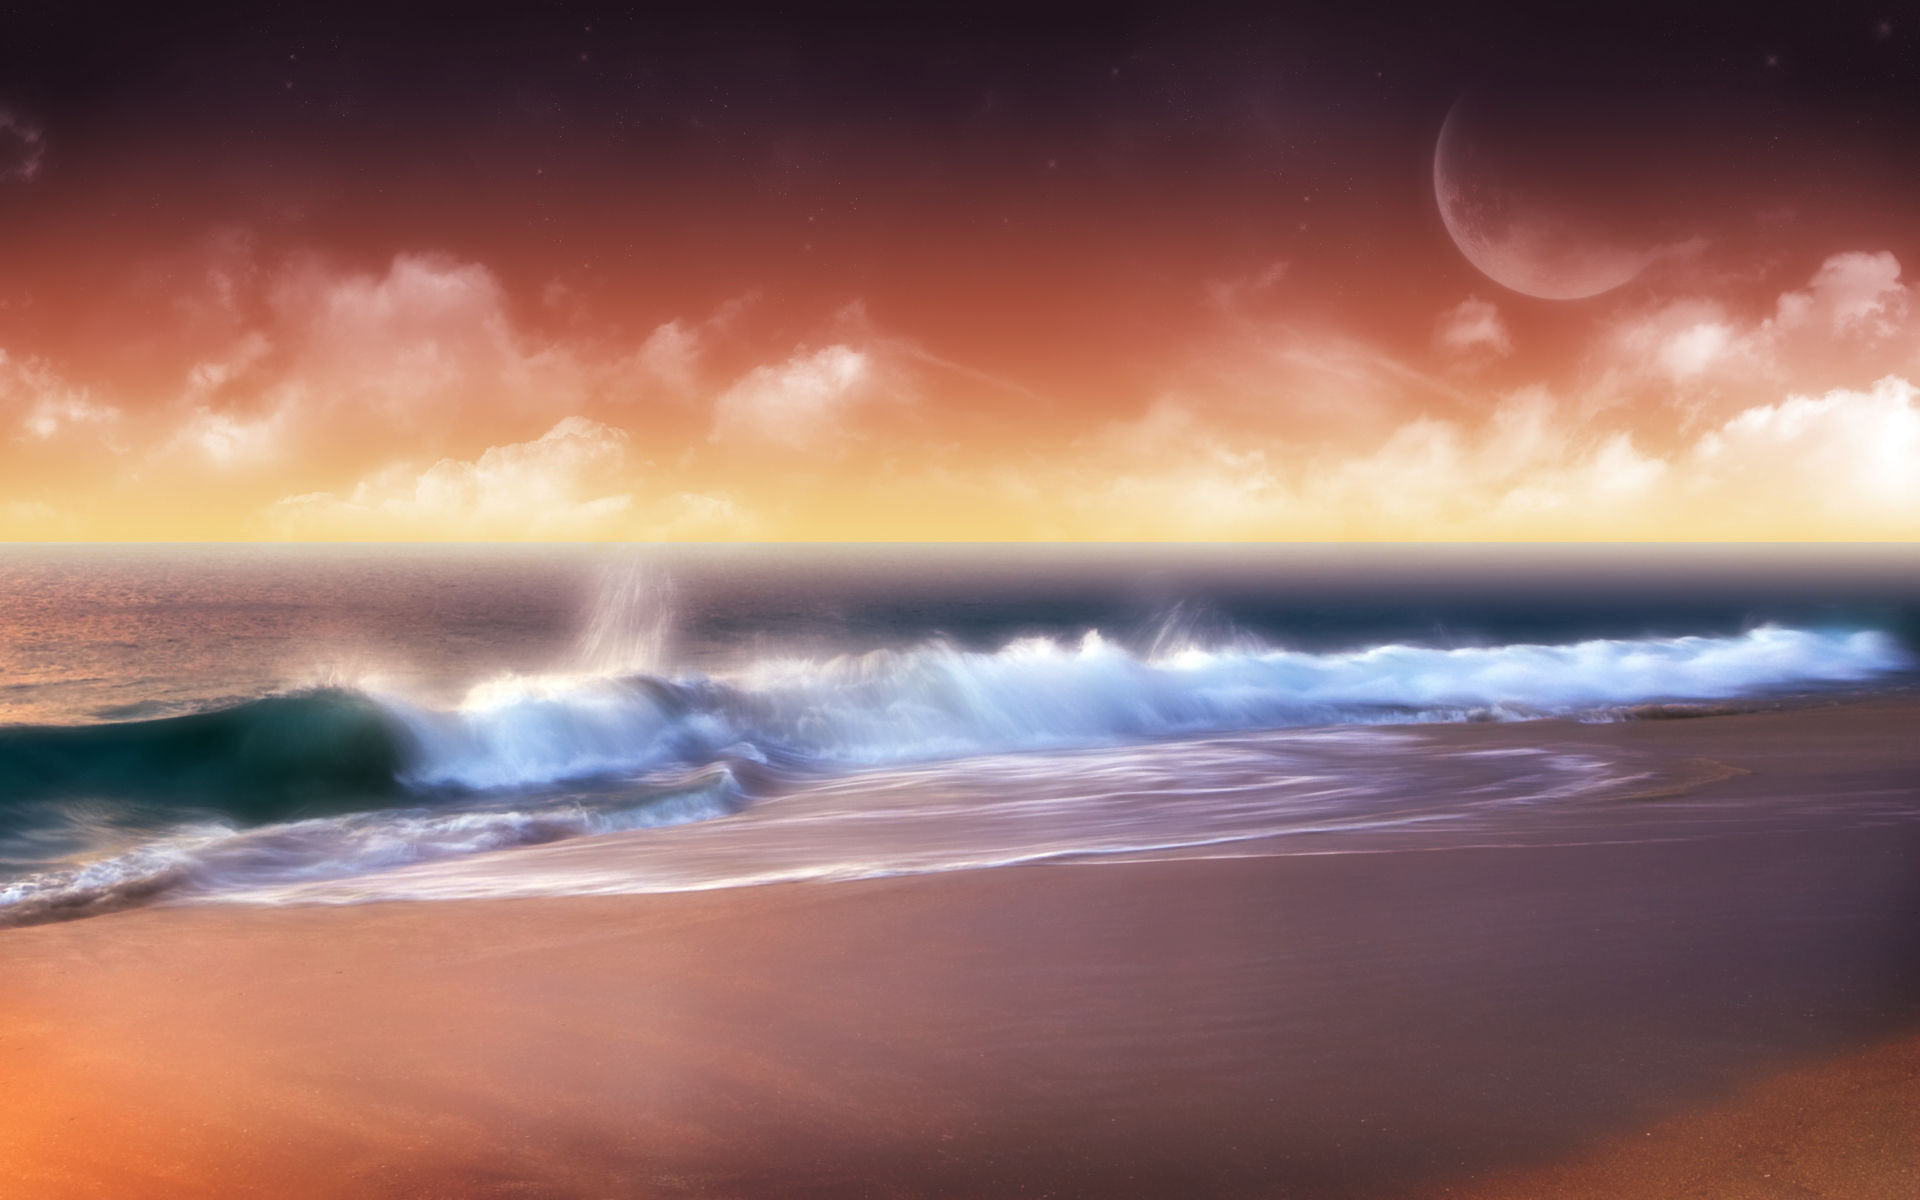 ocean, waves, artwork, beaches - desktop wallpaper